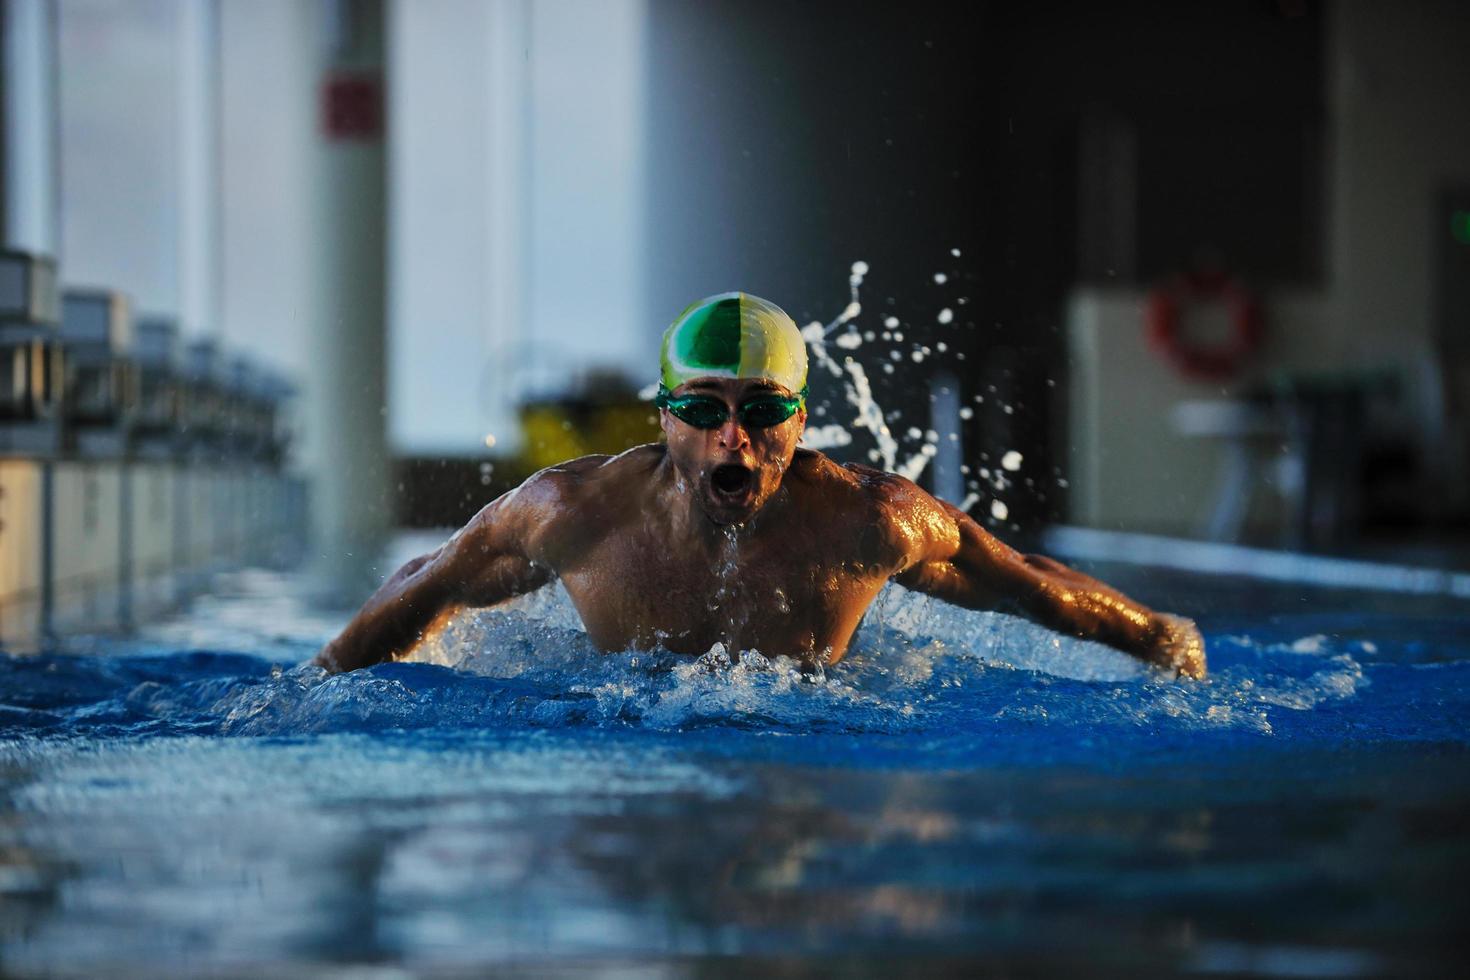 nadador na piscina foto